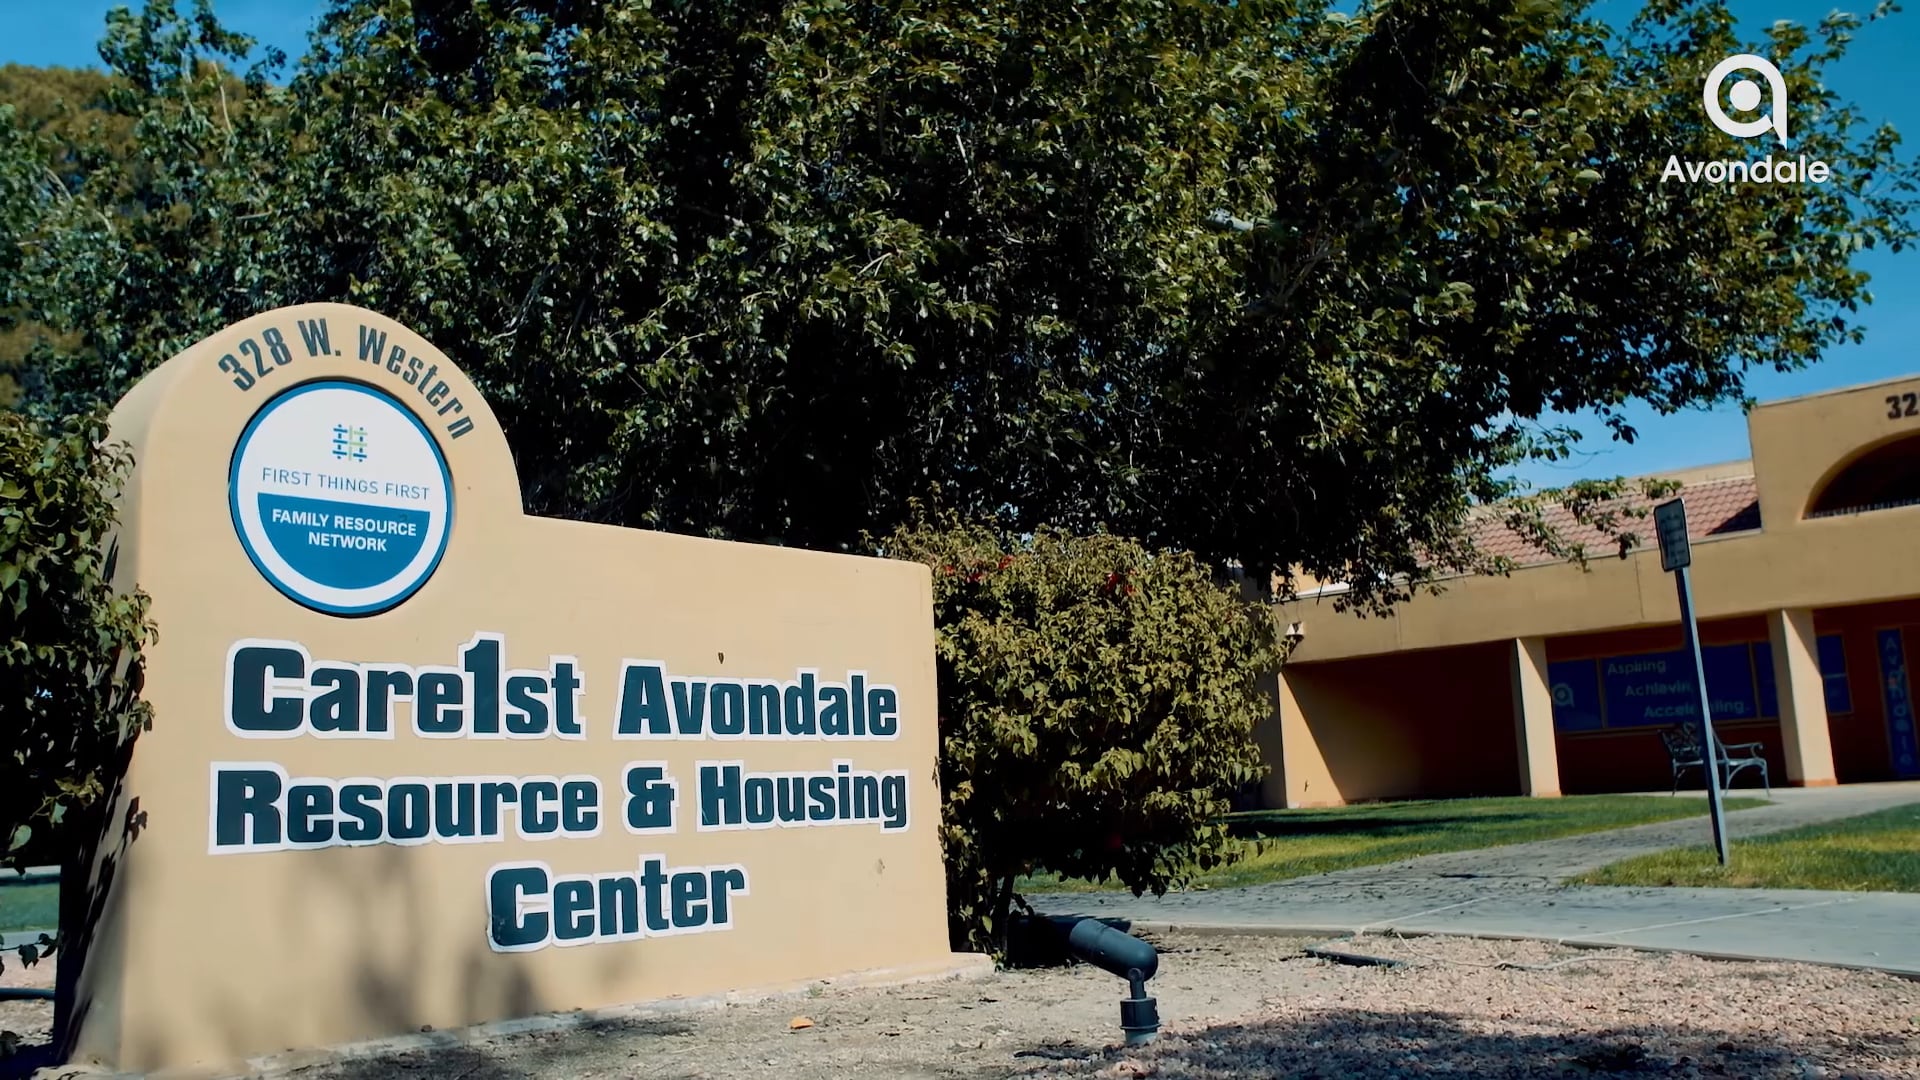 City of Avondale | Avondale Care1st Resource Center